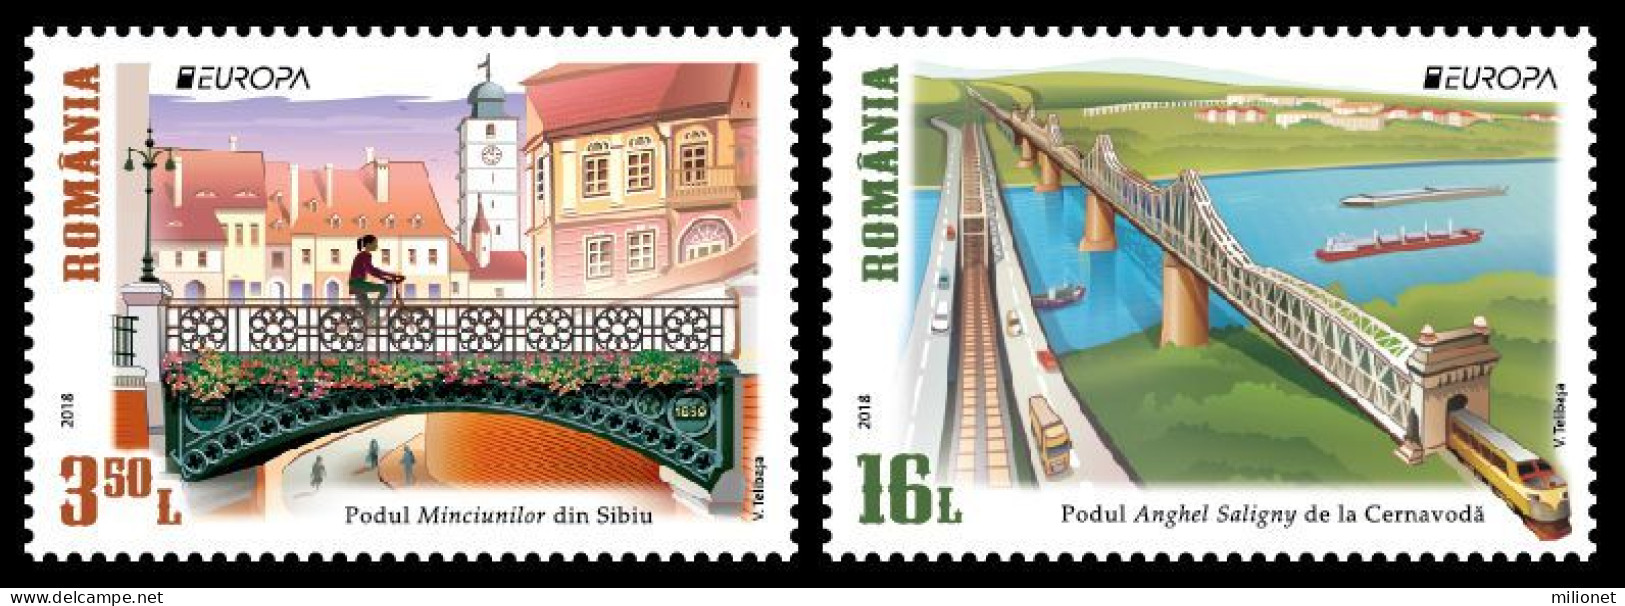 SALE!!! ROMANIA RUMANIA ROUMANIE RUMÄNIEN 2018 EUROPA CEPT Bridges 2 Stamps Set MNH ** - 2018